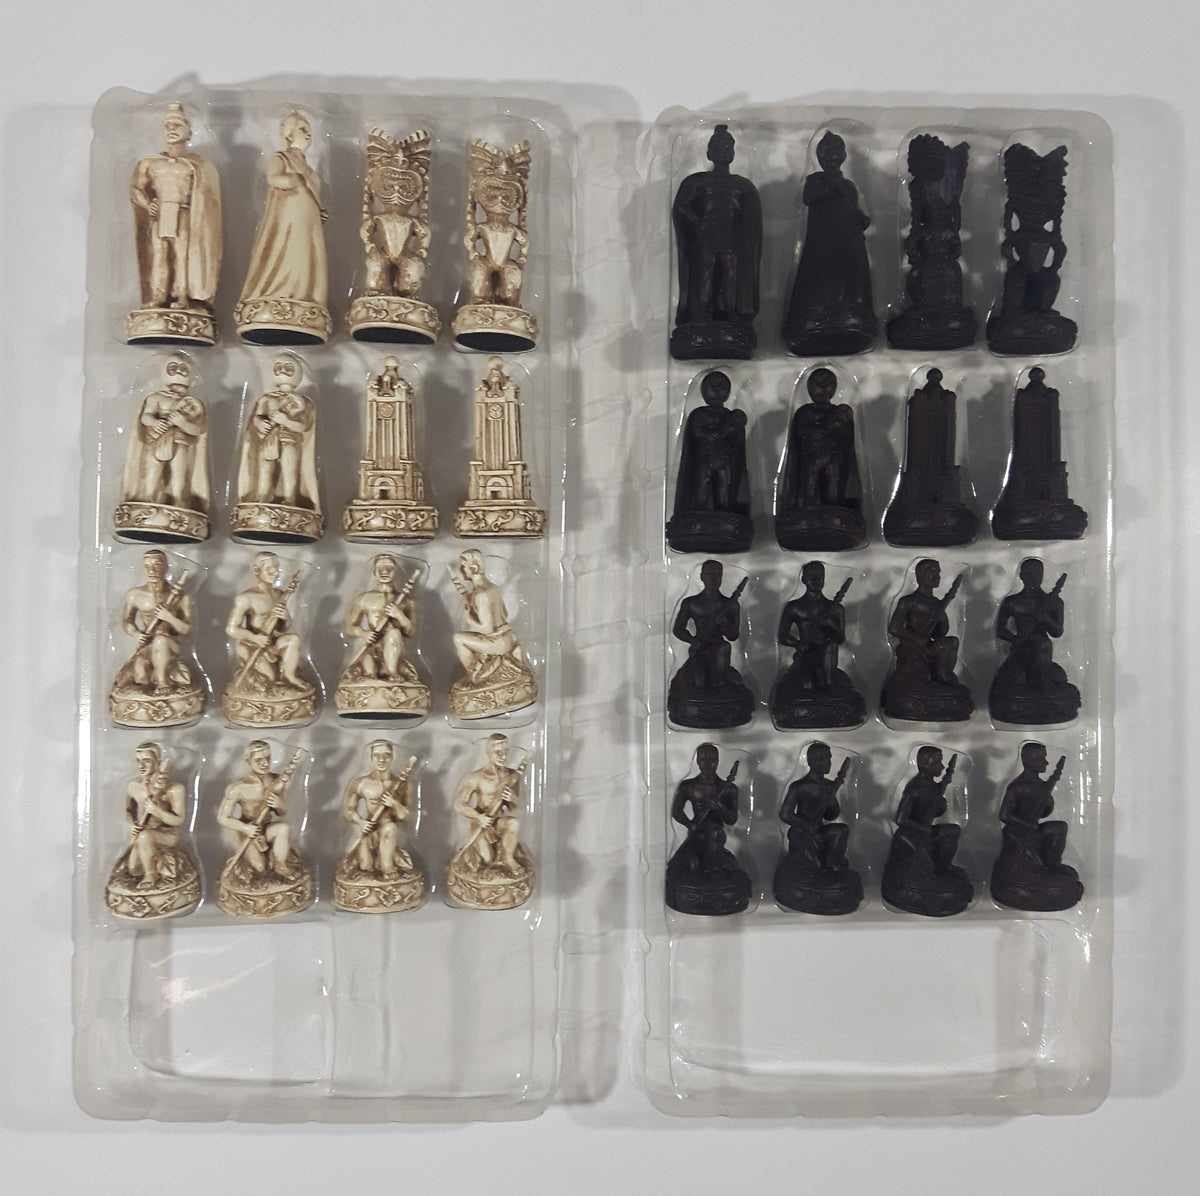 Hawaiian Crown Brass Metal Luxury Chess Pieces & Board Set